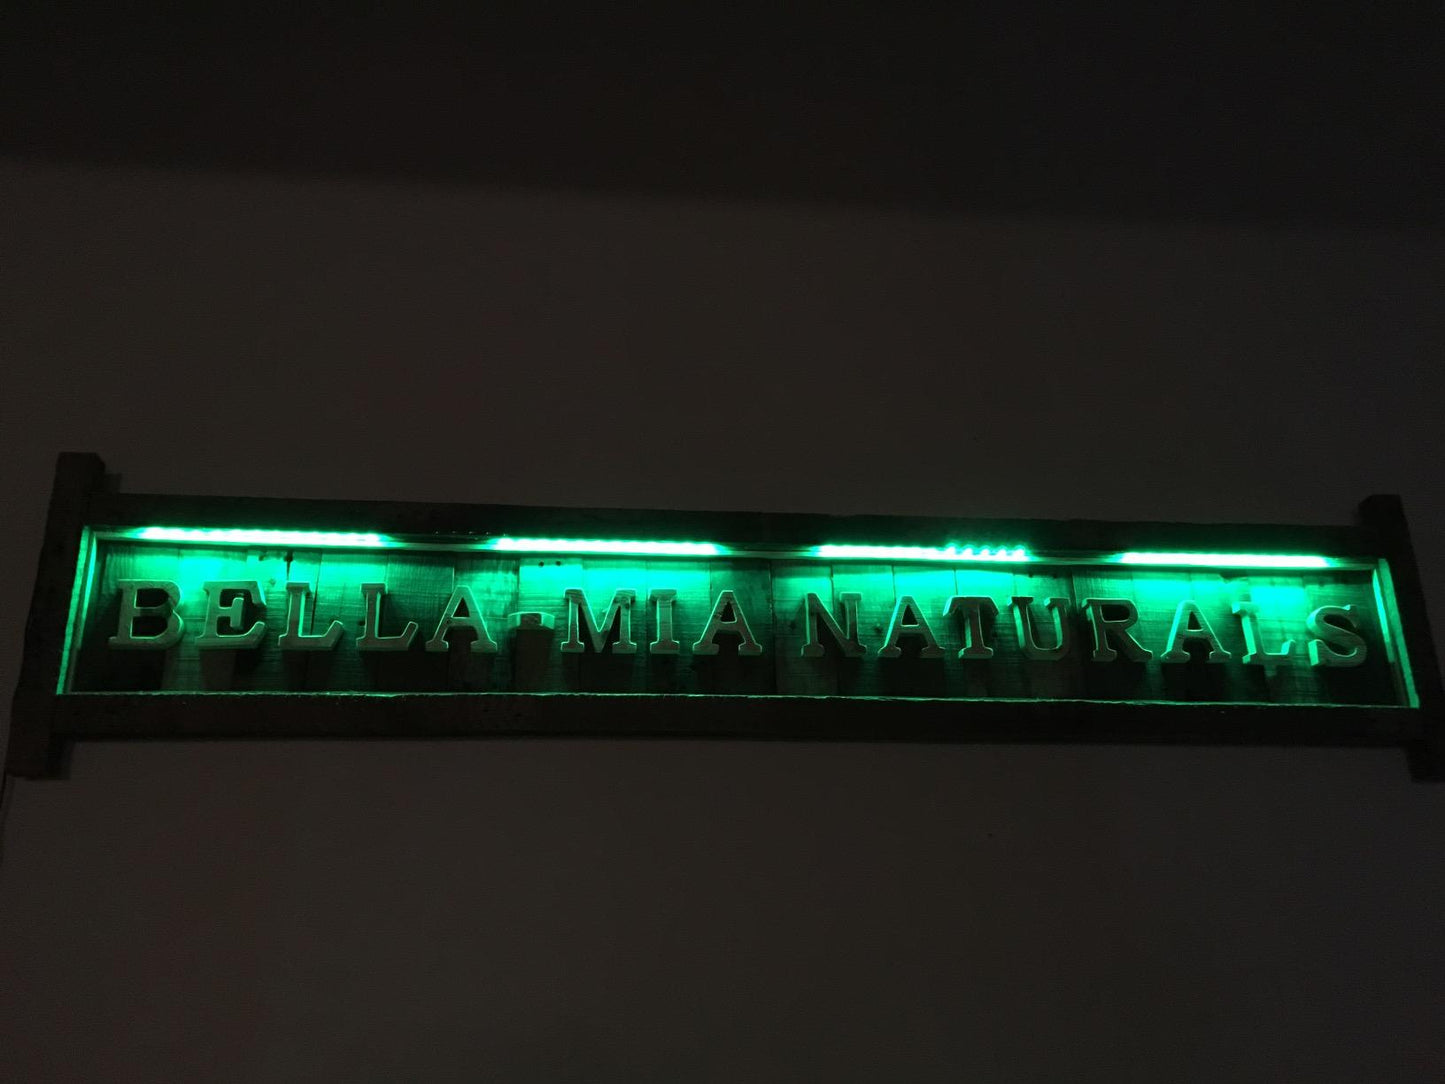 Verknüpfbares RGB-LED-Lichtleisten-Kit Fernbedienung, 4er-Set